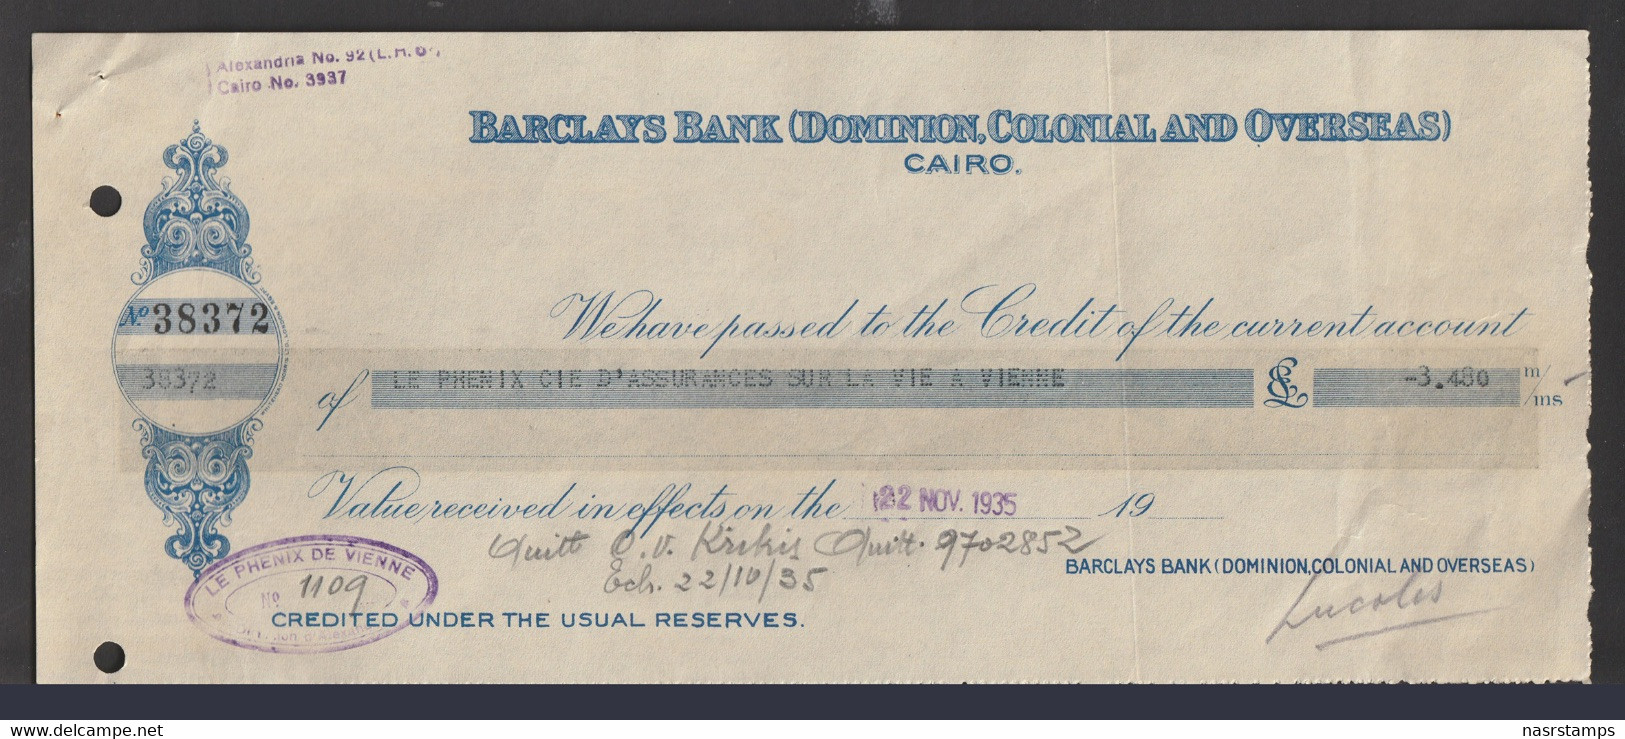 Egypt - 1935 - Vintage Check - Barclays Bank ( DOMINION, COLONIAL AND OVERSEAS - CAIRO ) - Serie Da Collezione